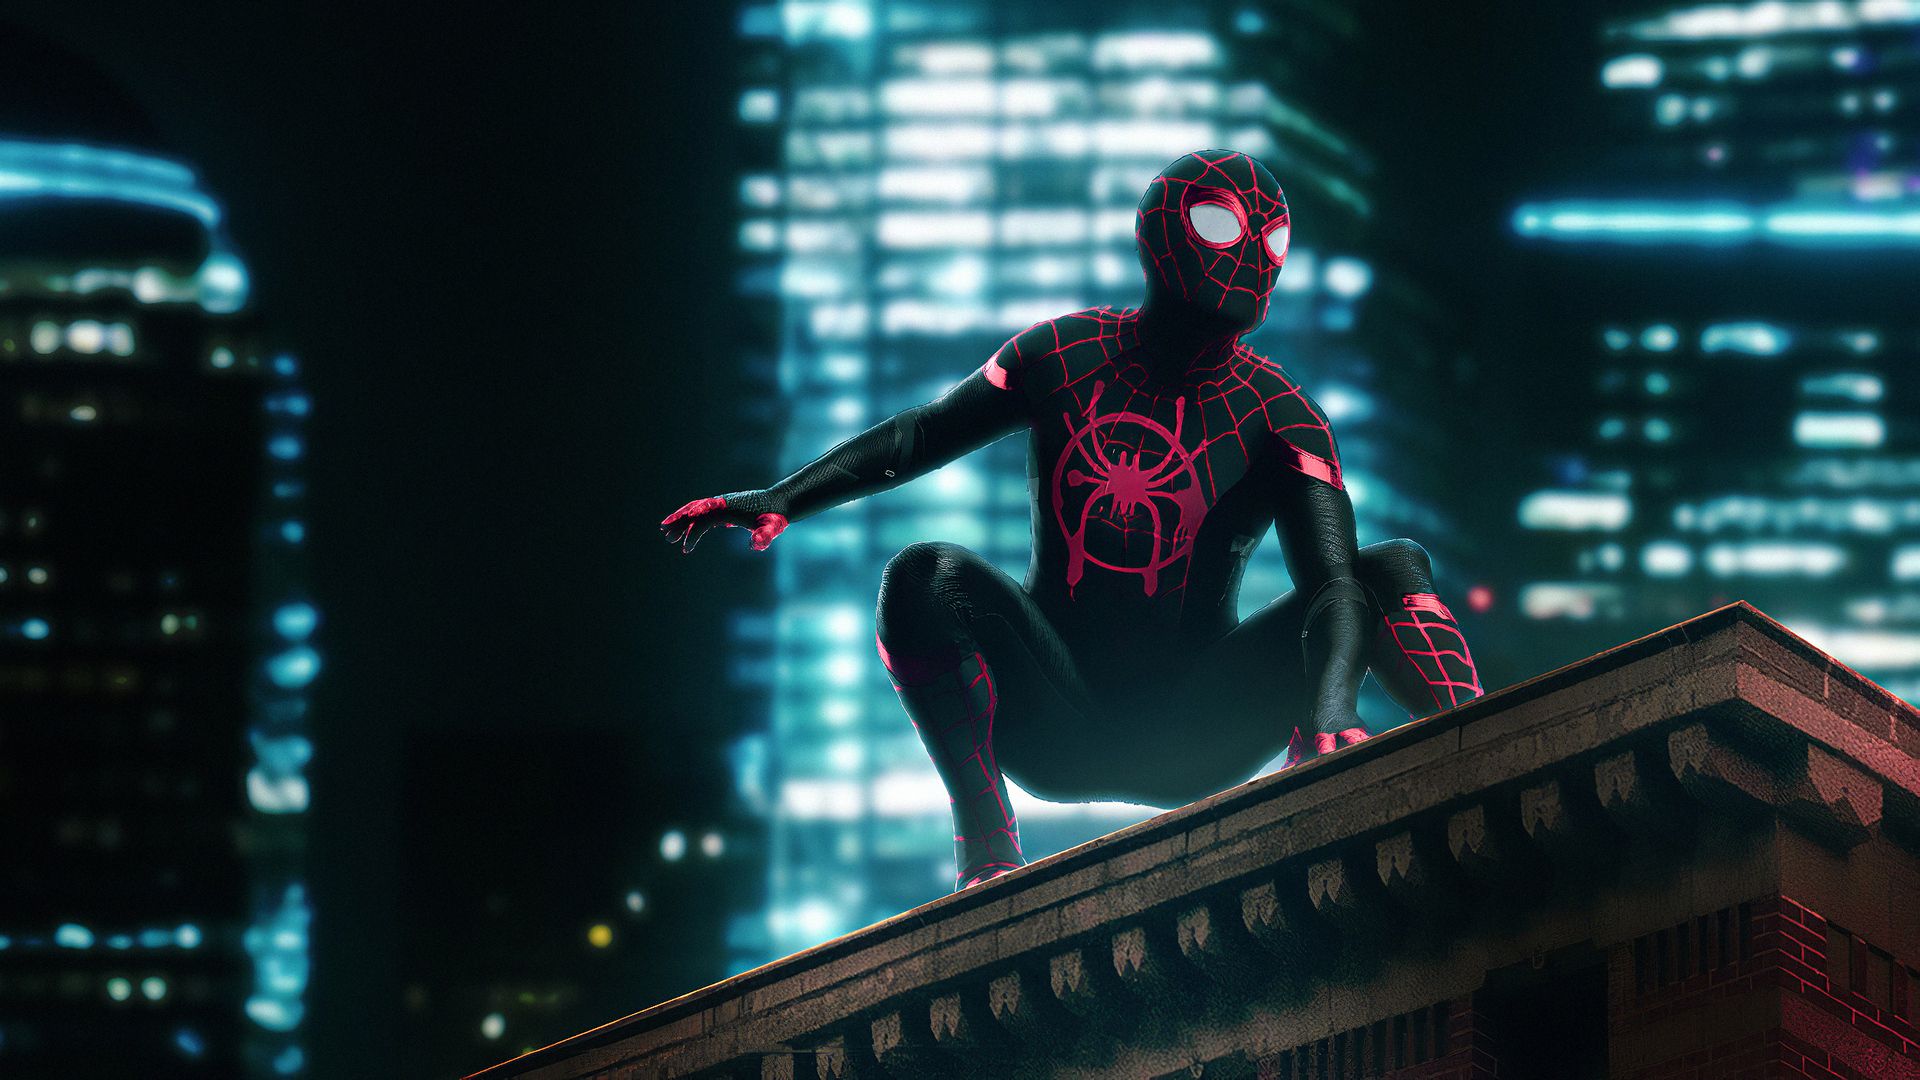 1080p Neon Spiderman Wallpaper